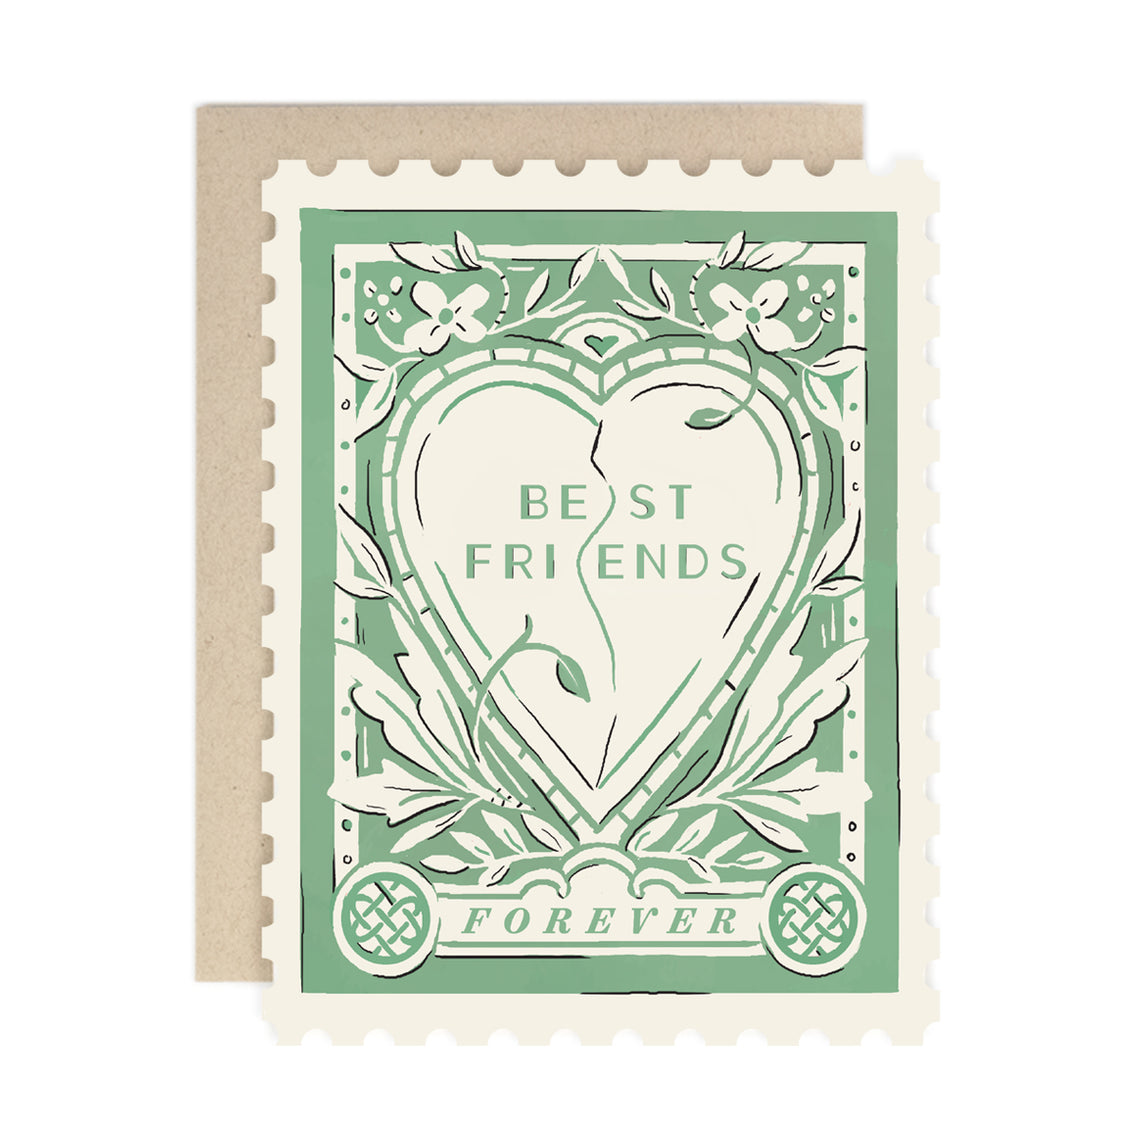 Best Friends Forever Stamp Die Cut Card 